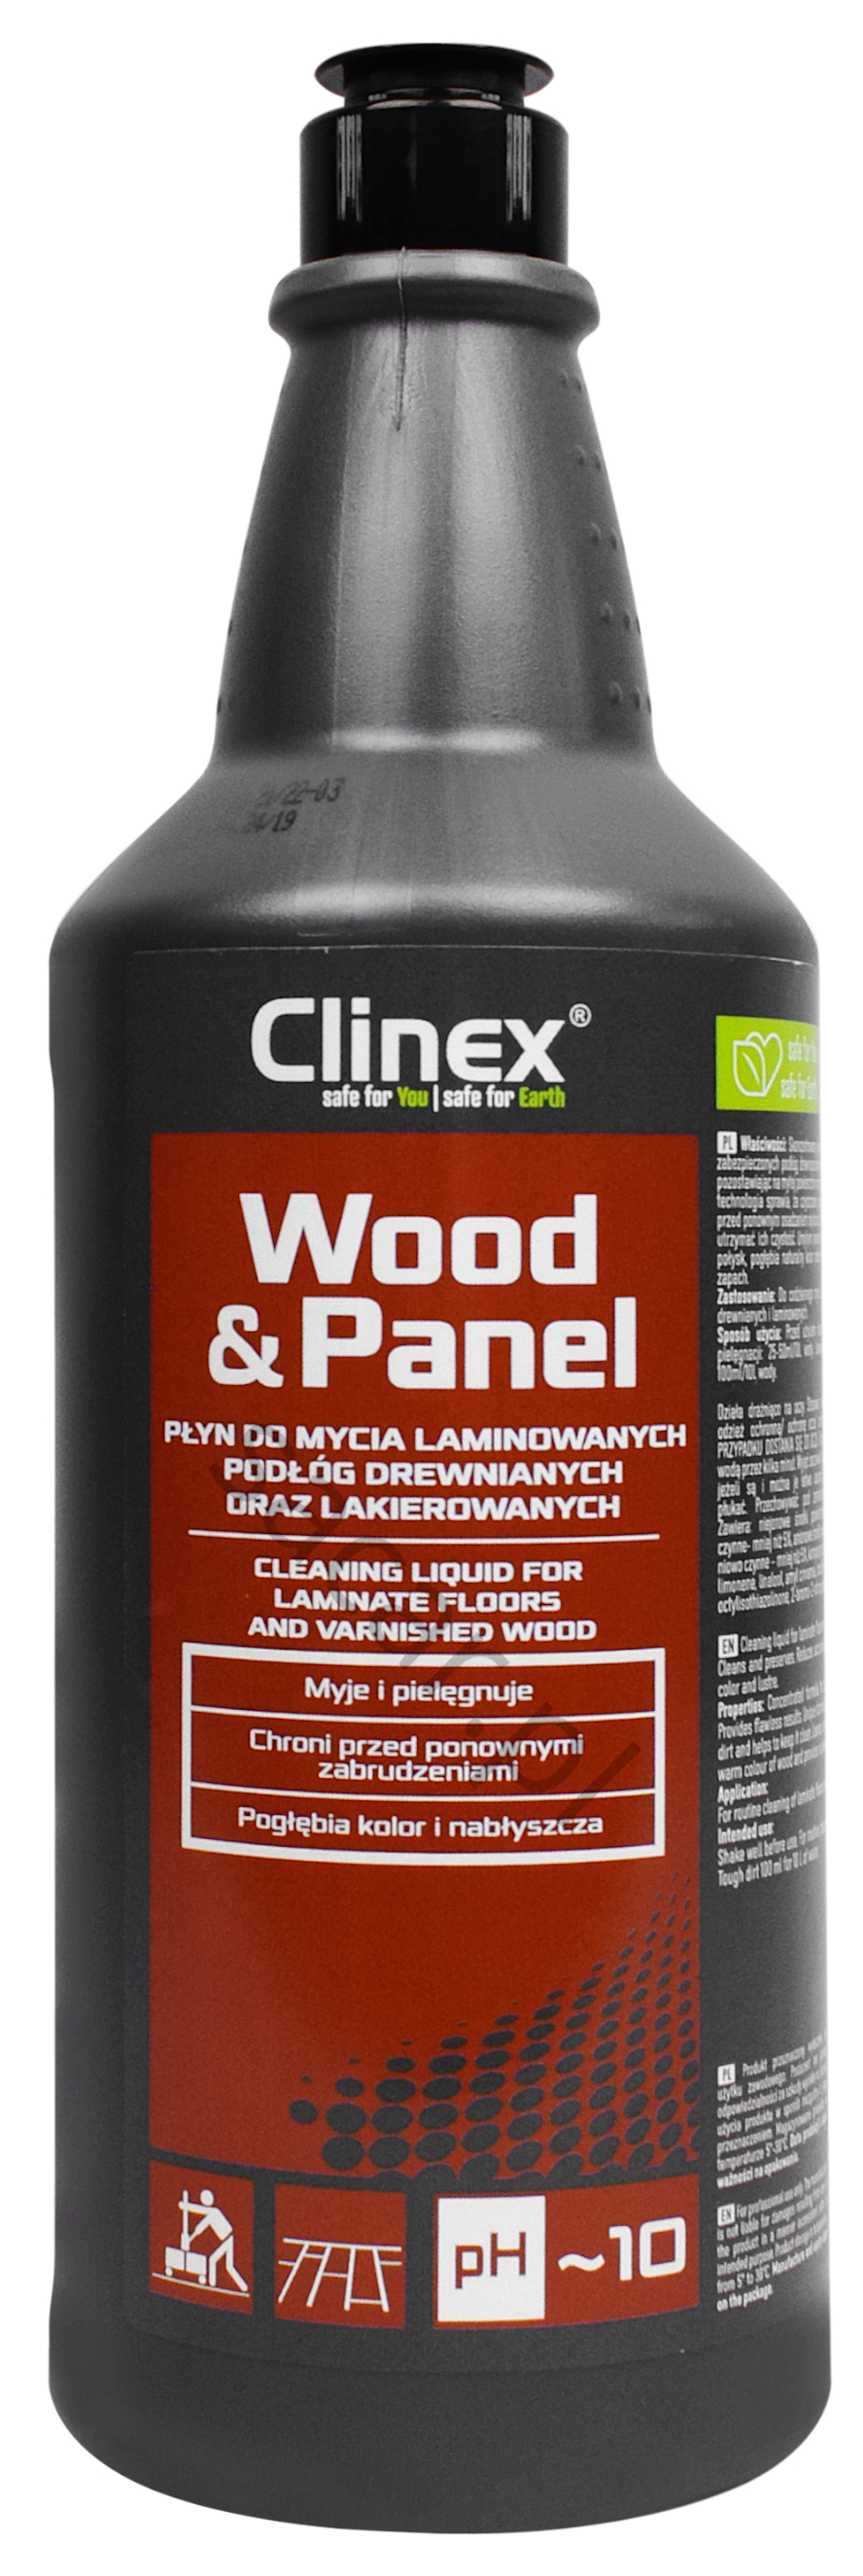 Clinex Wood & Panel 1l